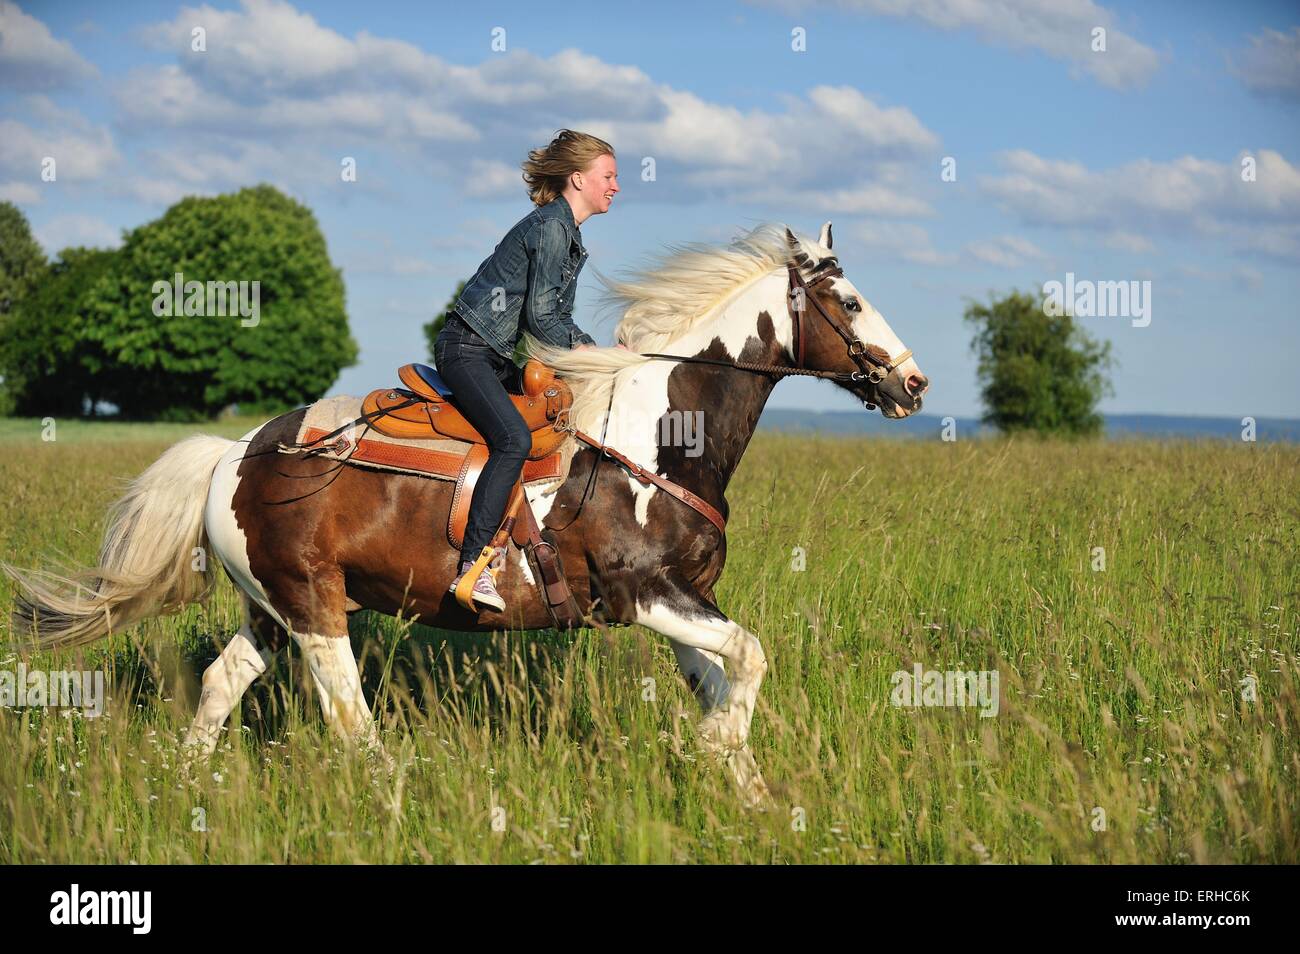 woman rides horse Stock Photo - Alamy